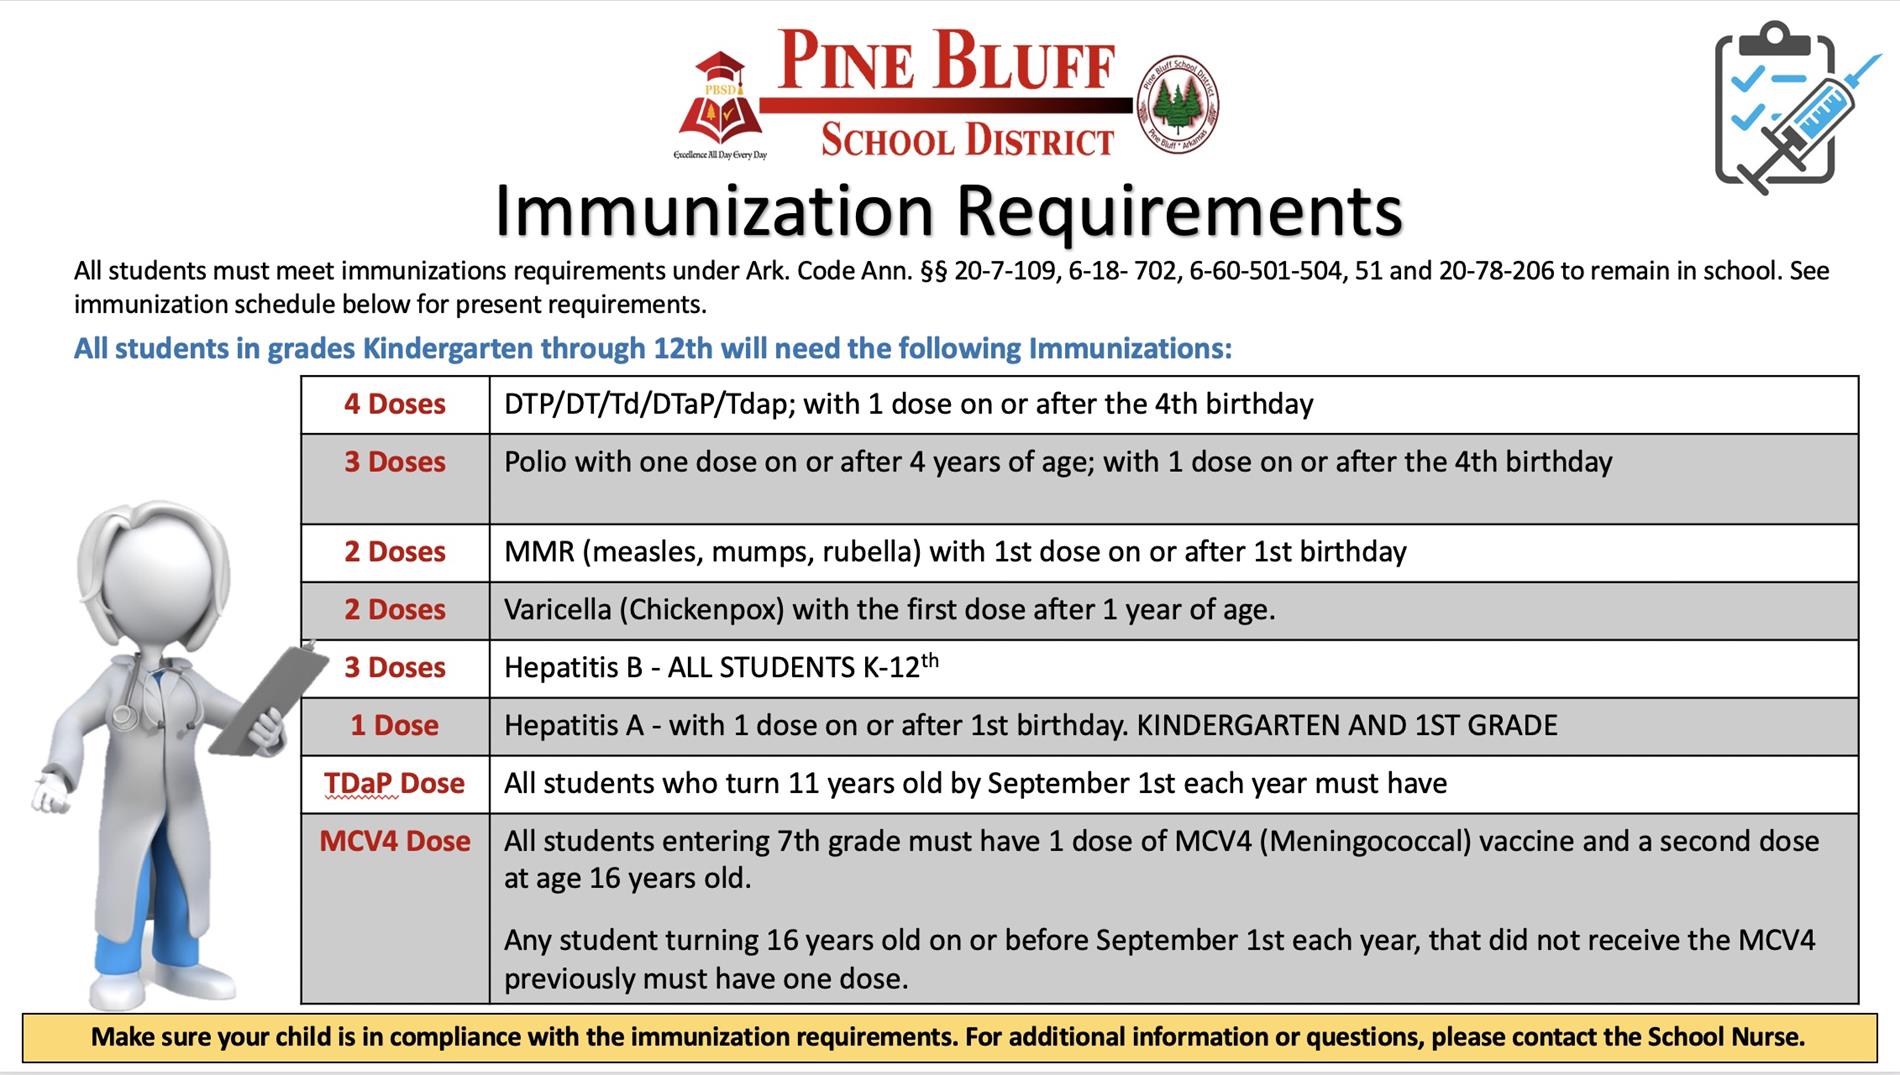 Immunization Requirements